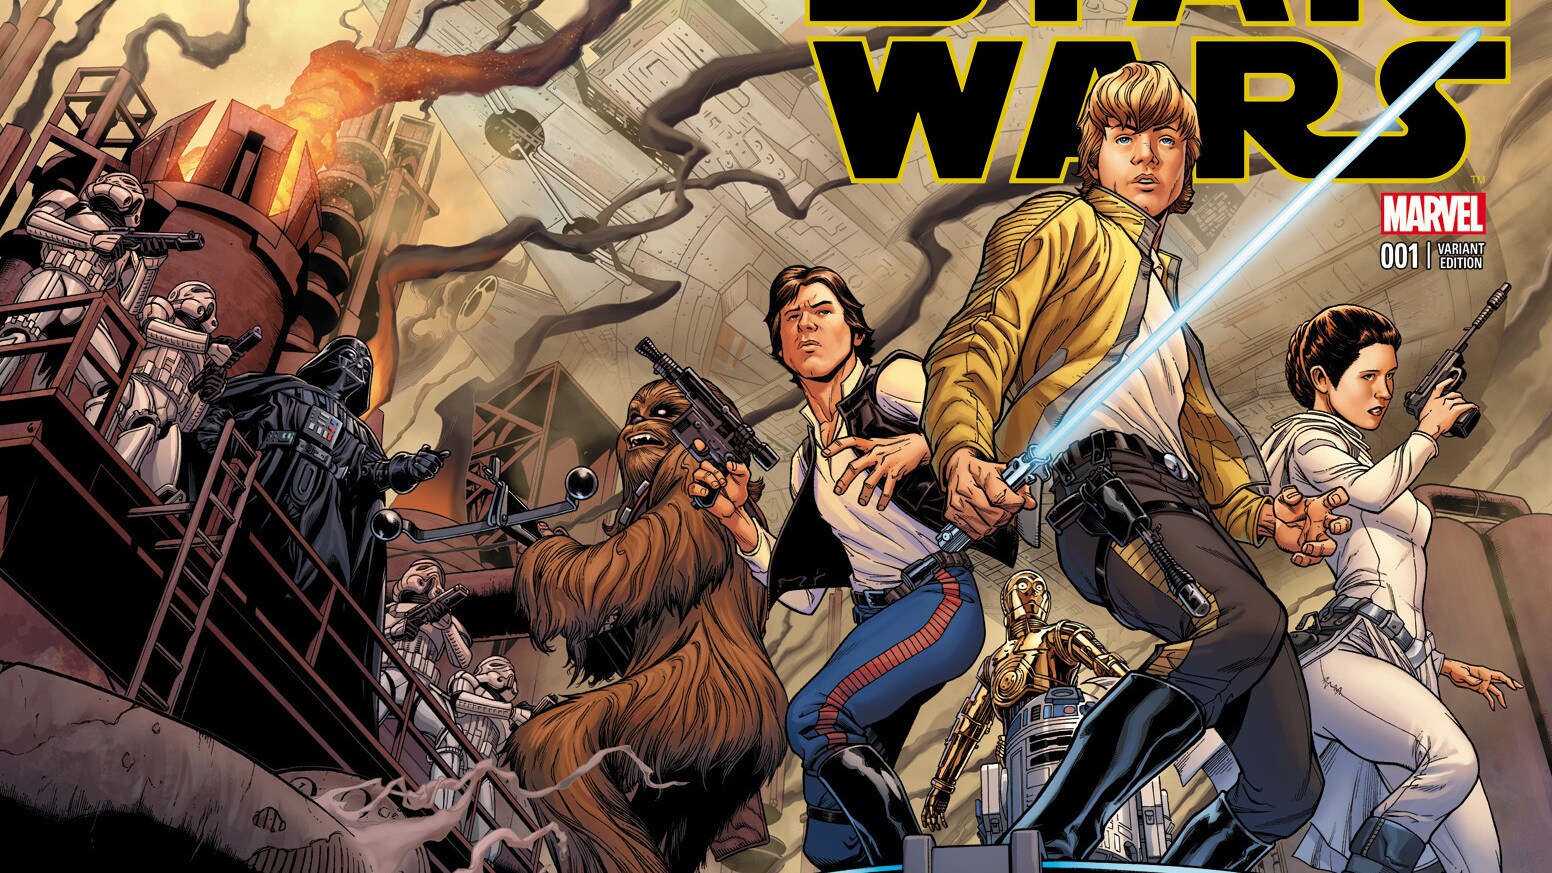 Star Wars #1 Variant Cover By Joe Quesada - First Look!